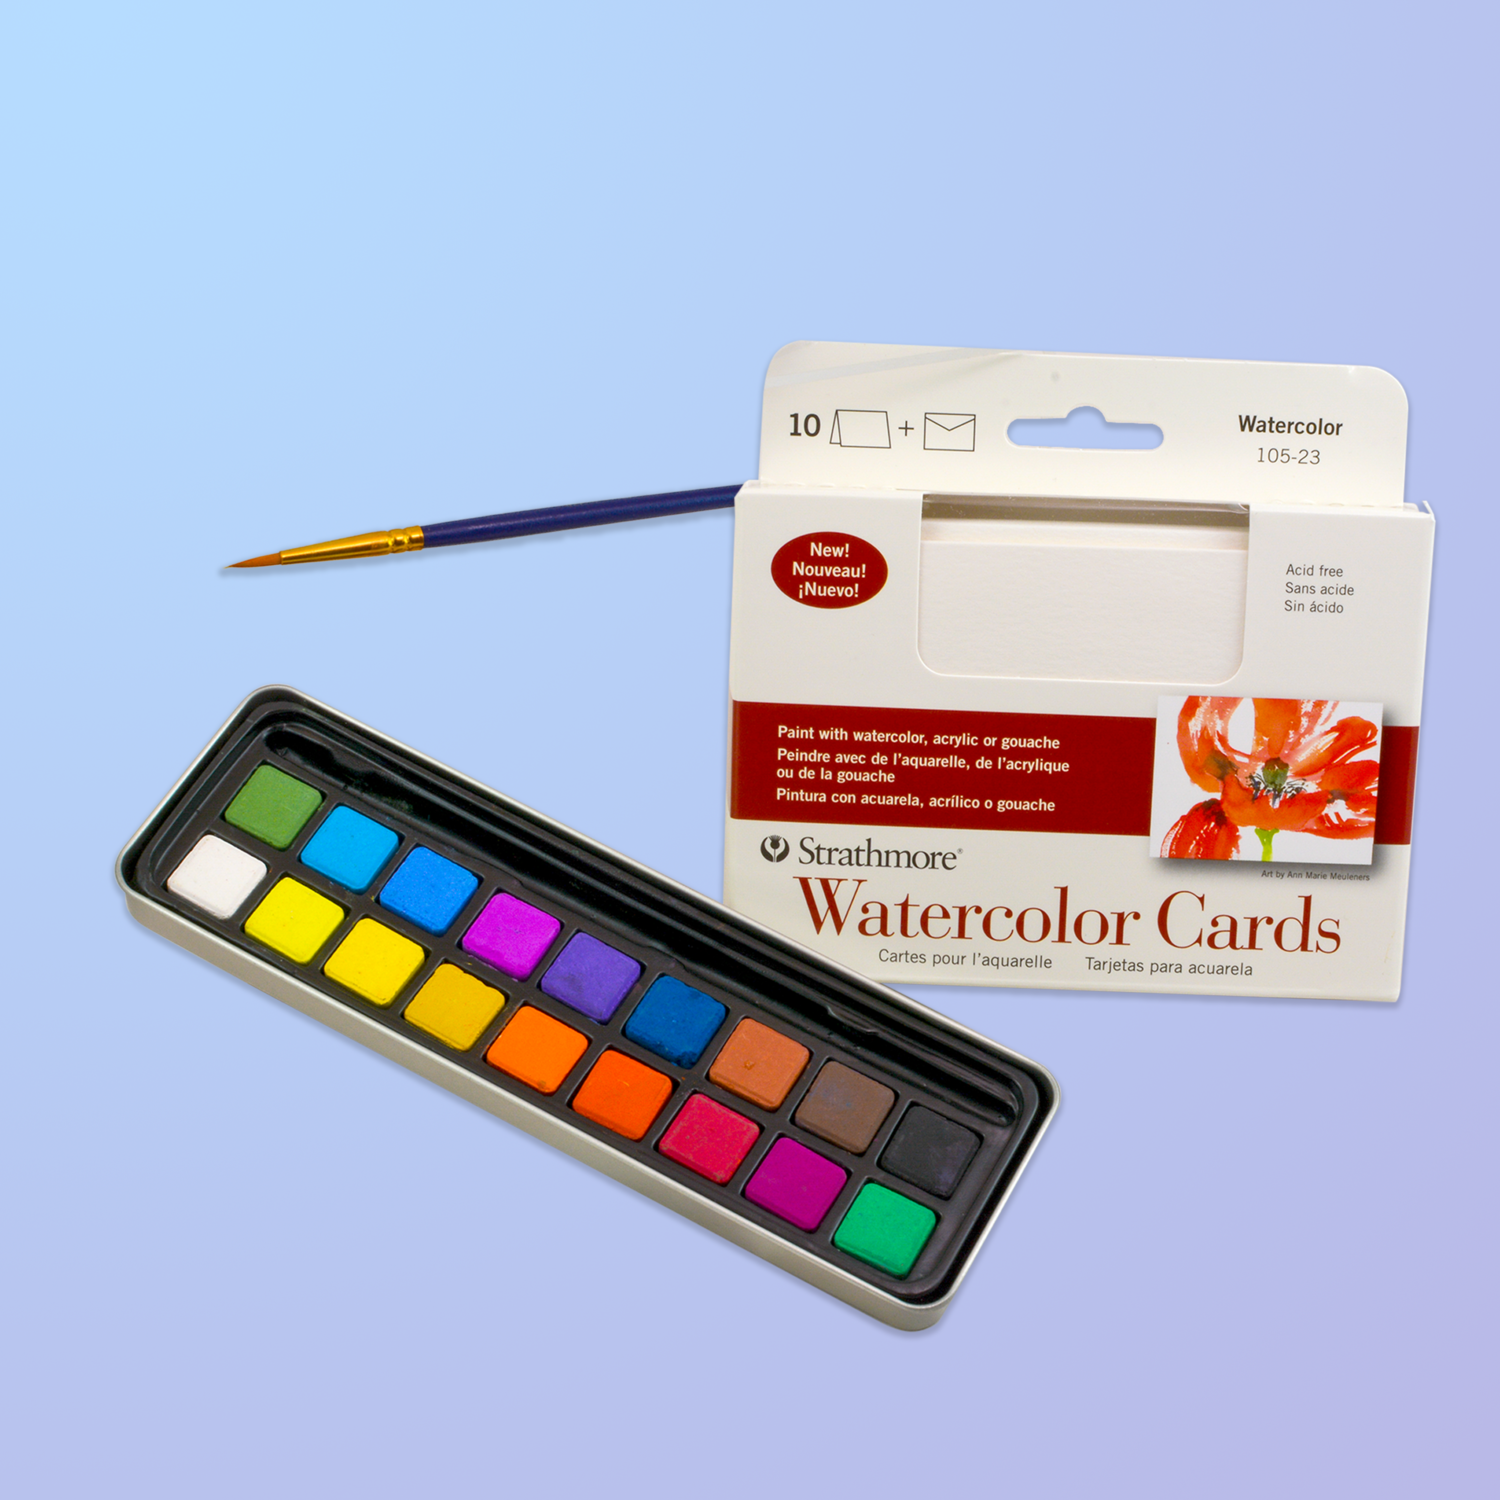 Watercolor Cardmaking Kit